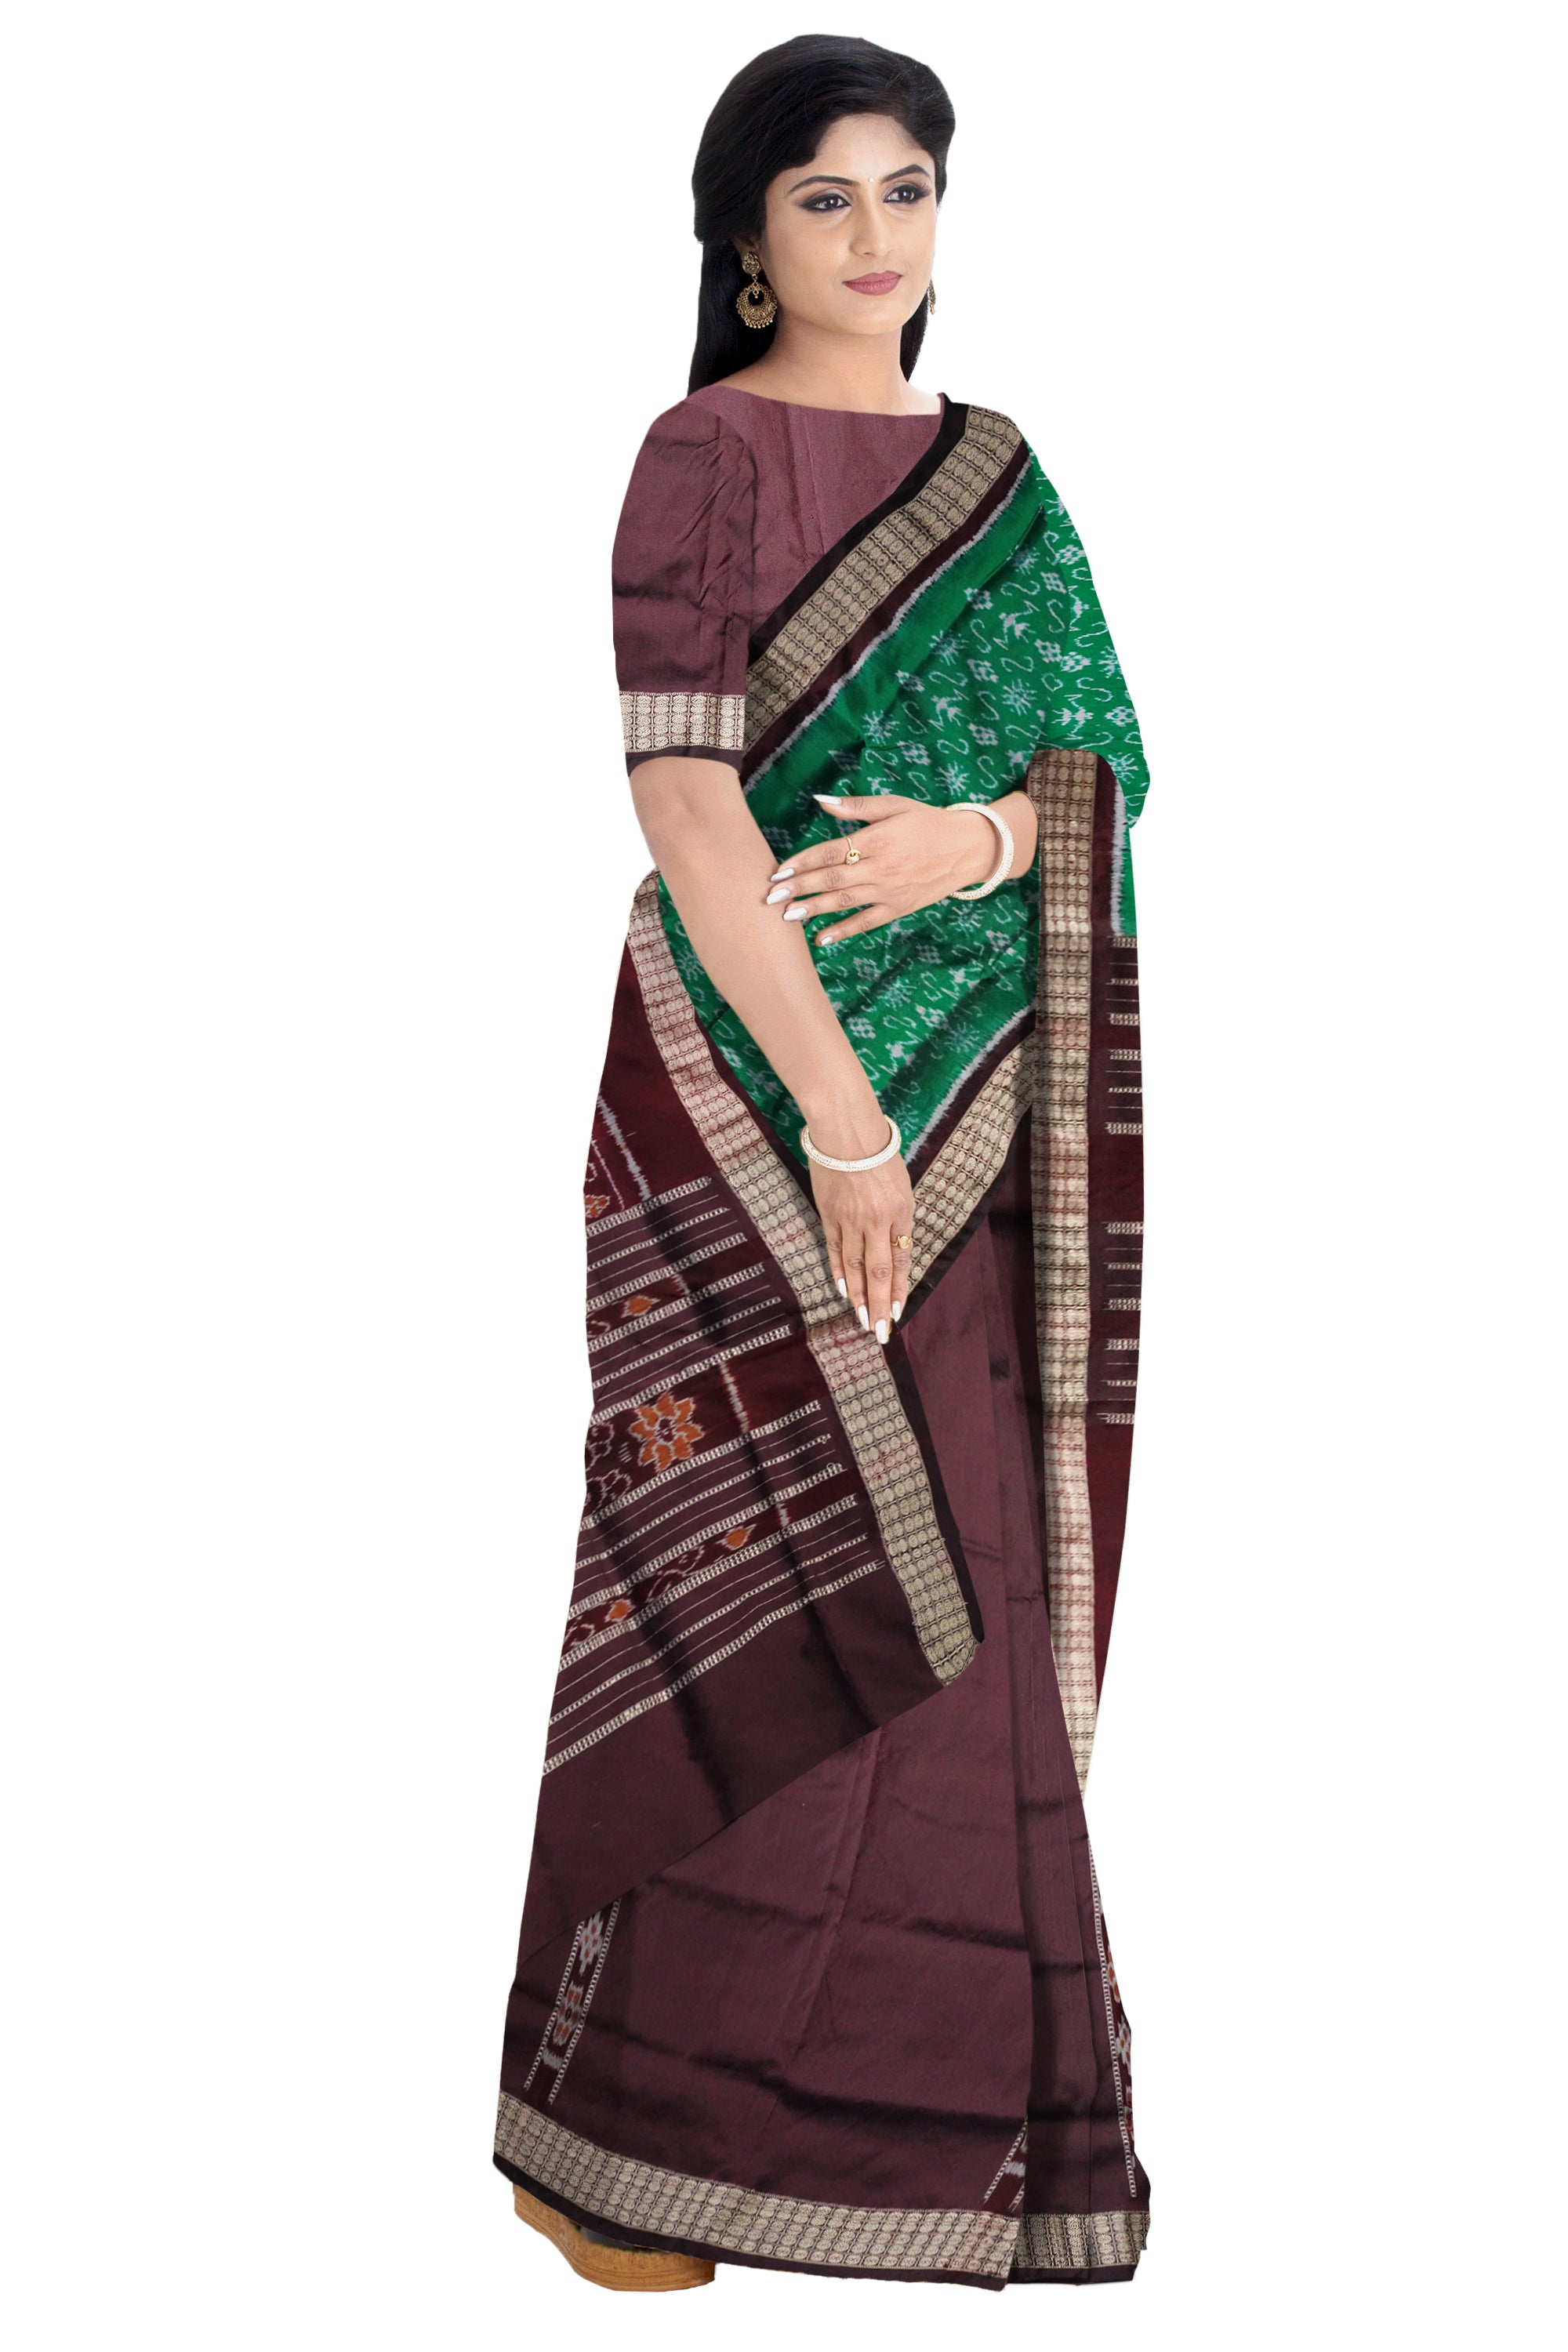 Terracotta with Pasapali pattern patli design Sambalpuri pata saree in Green and Coffee color. - Koshali Arts & Crafts Enterprise